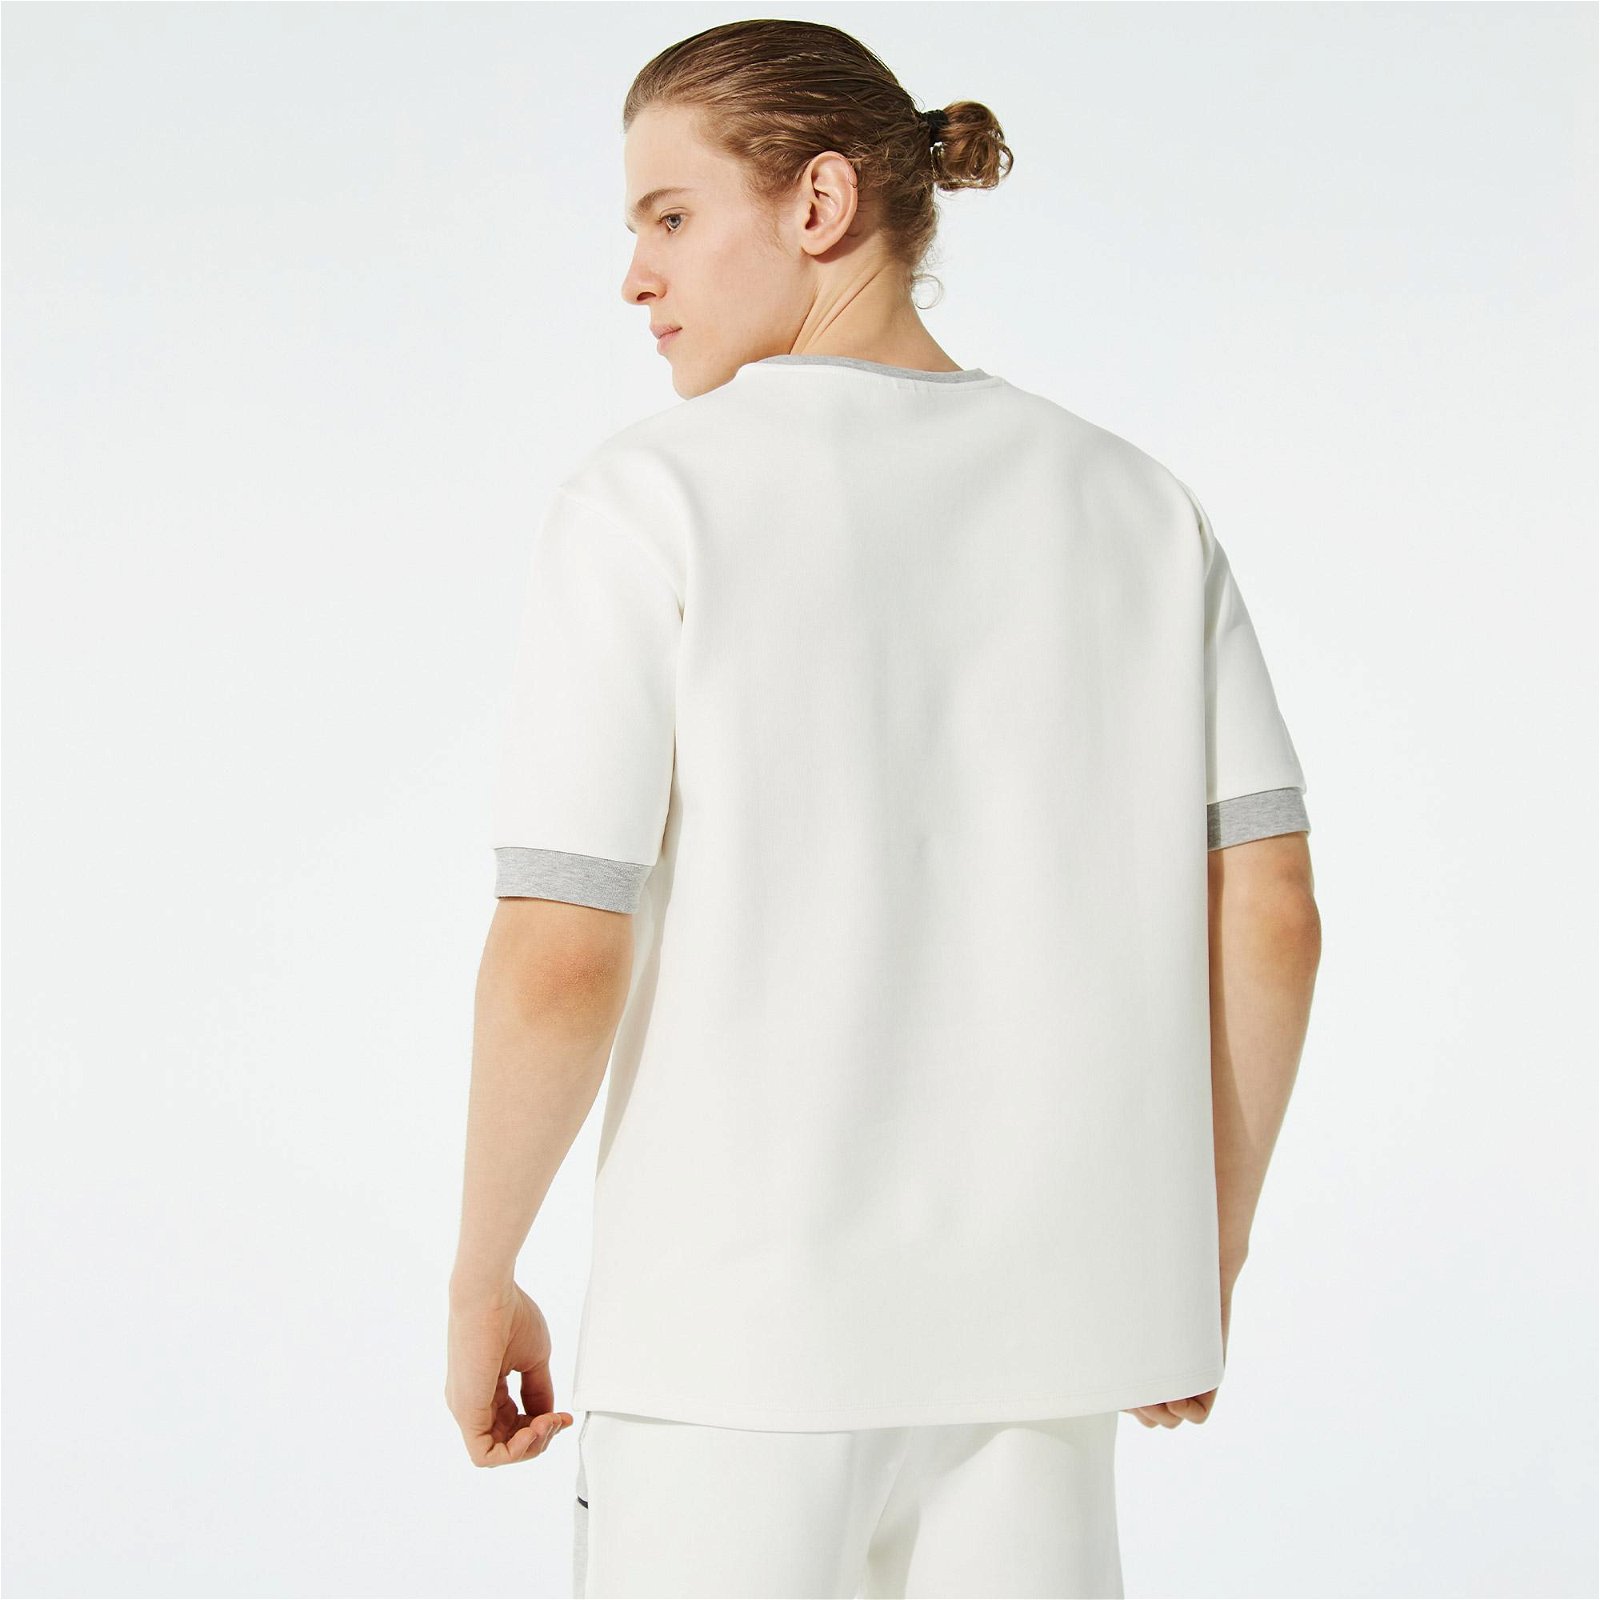 Kappa Authentic Tier One Lario Erkek Beyaz-Gri T-Shirt